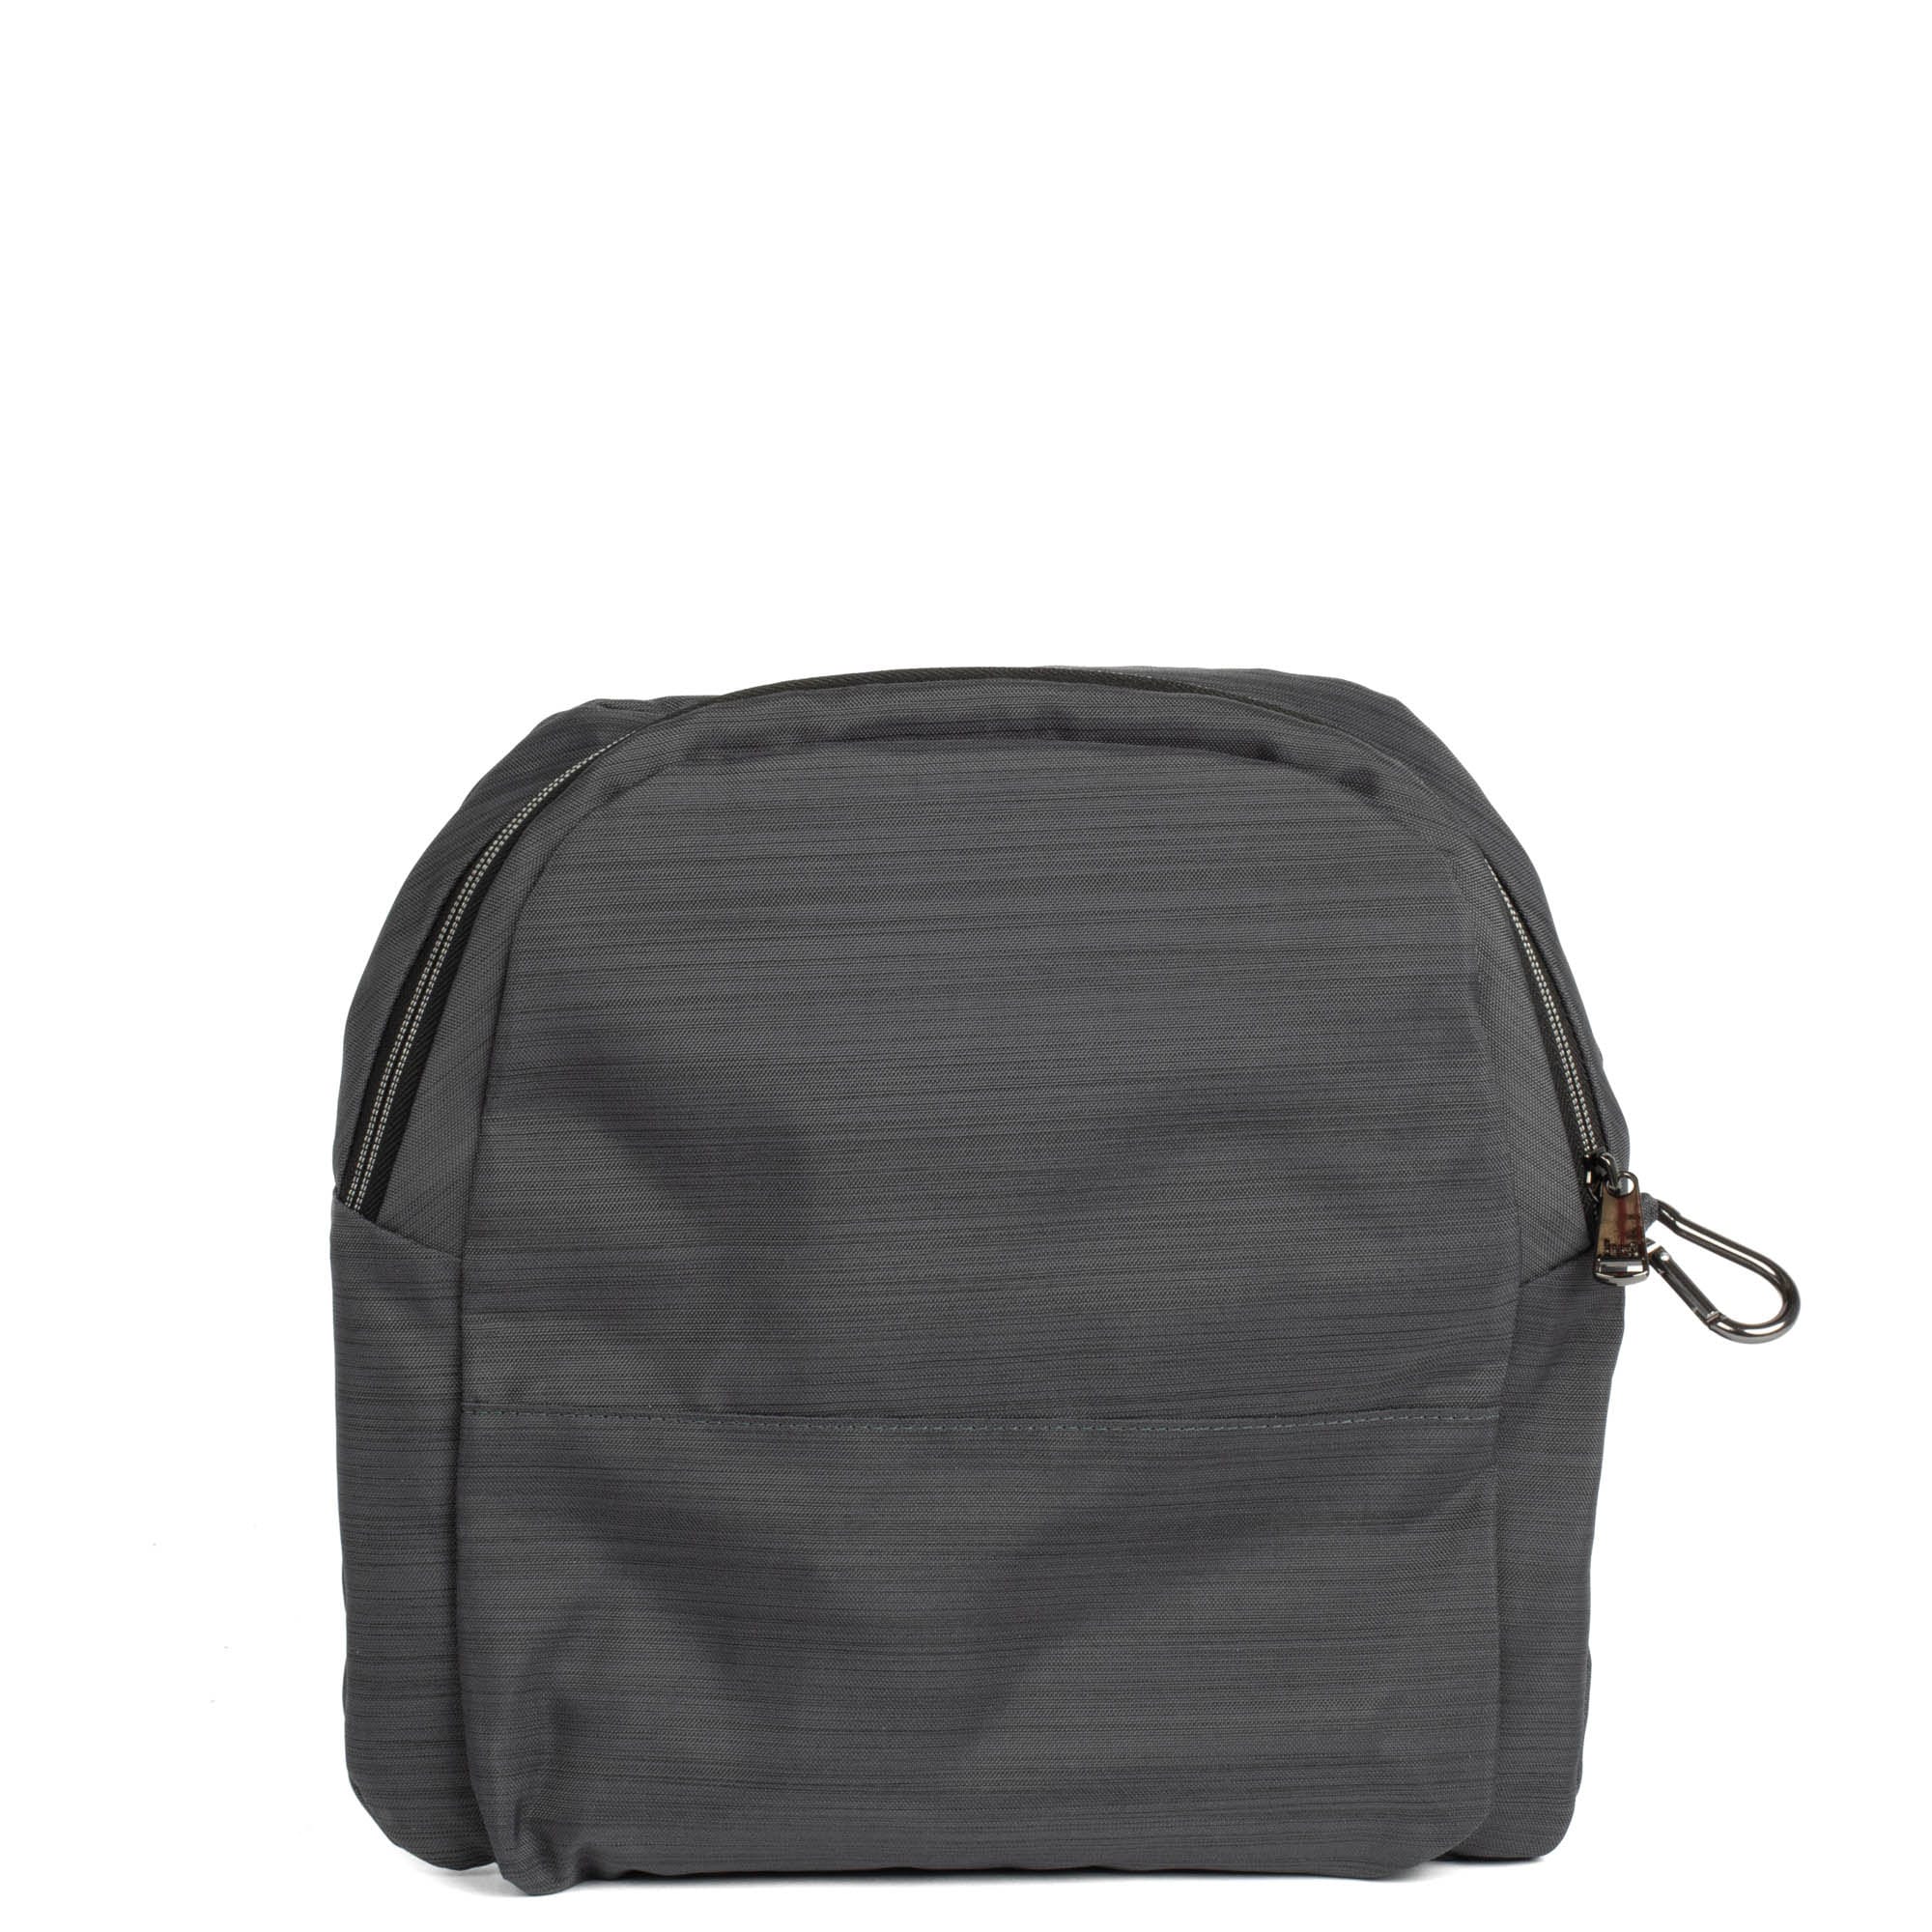 Echo 2 Packable Backpack- Brushed Grey